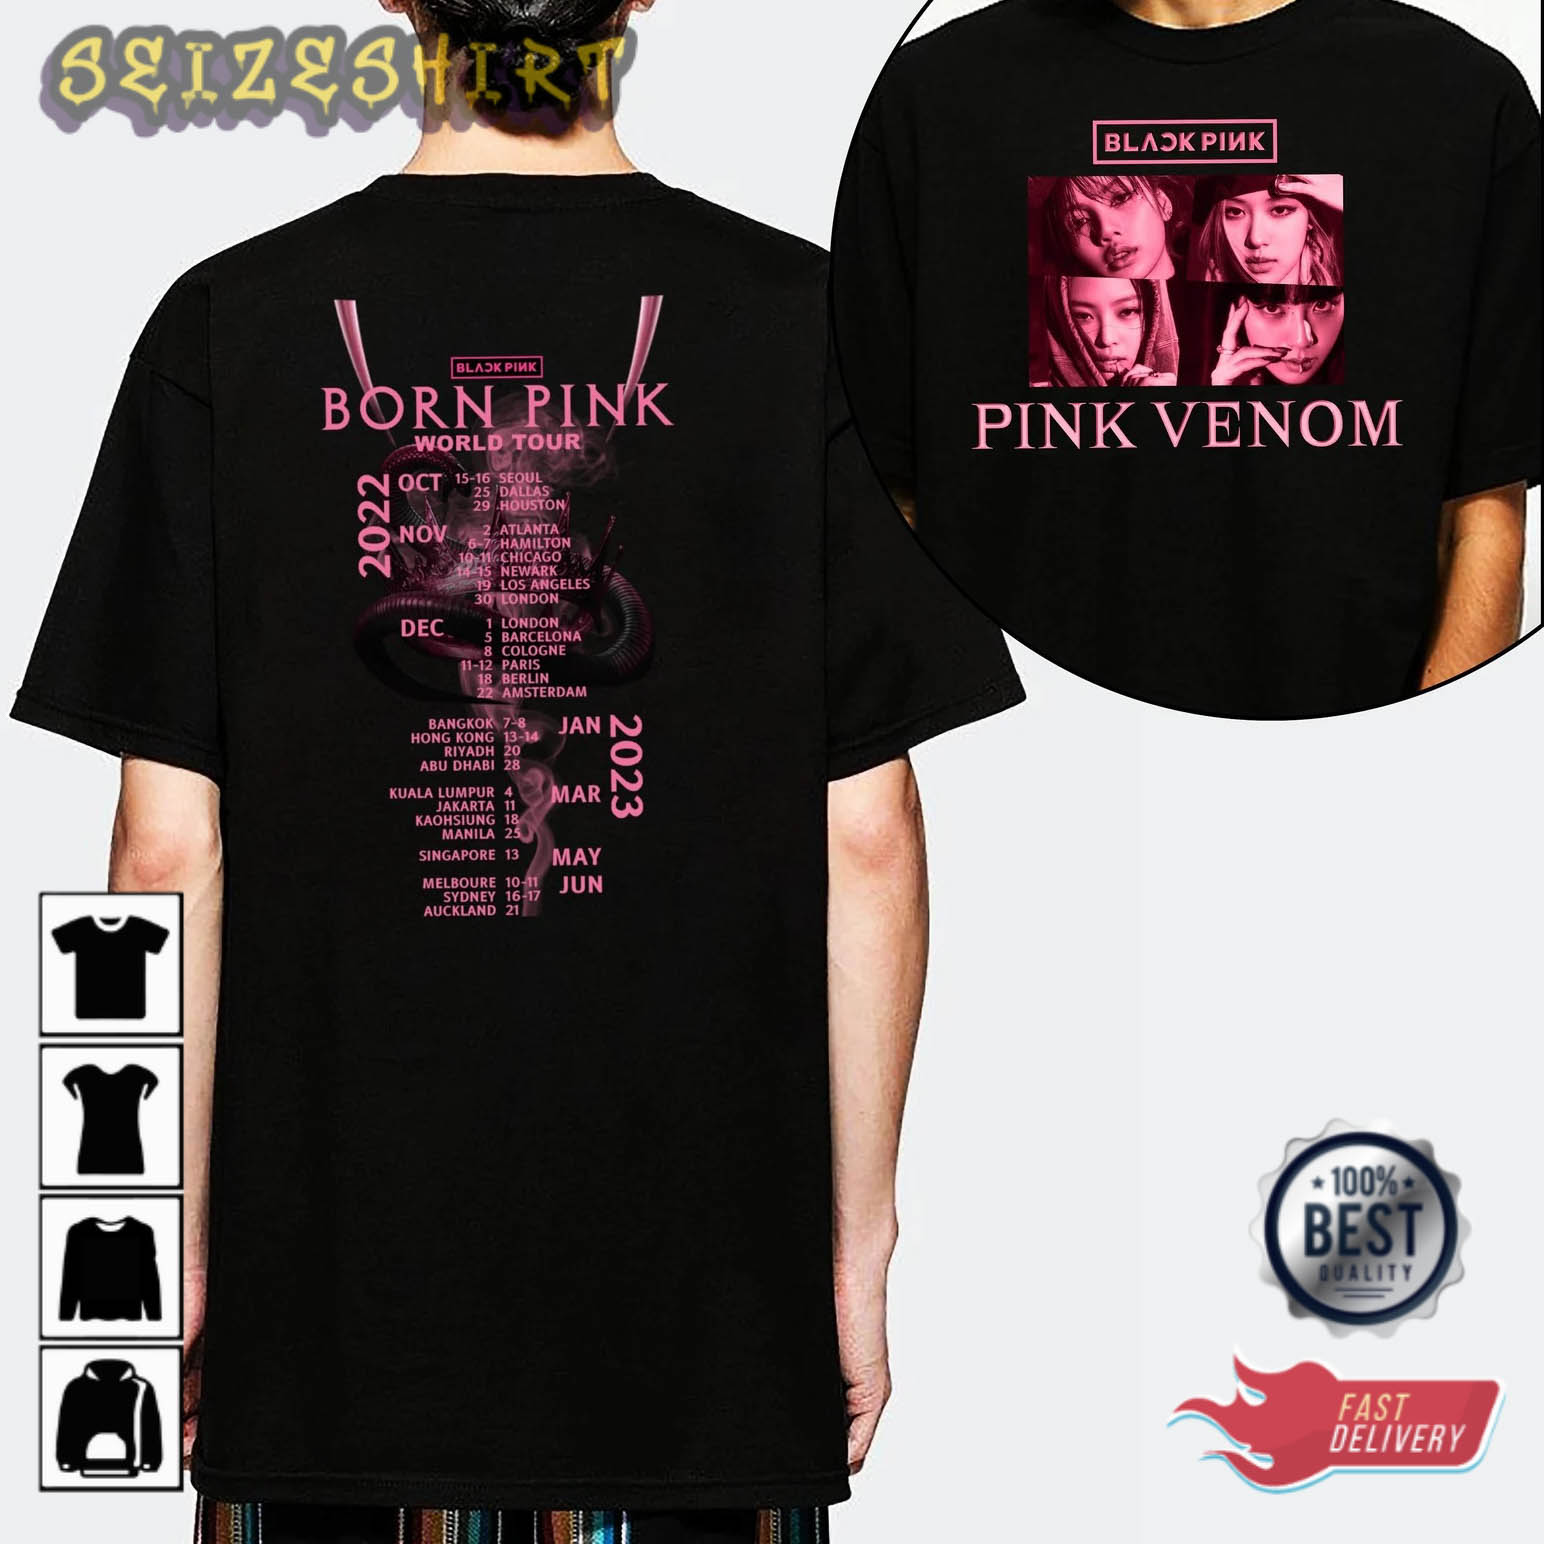 2022 Blackpink Tour T Shirt - Pink Venom